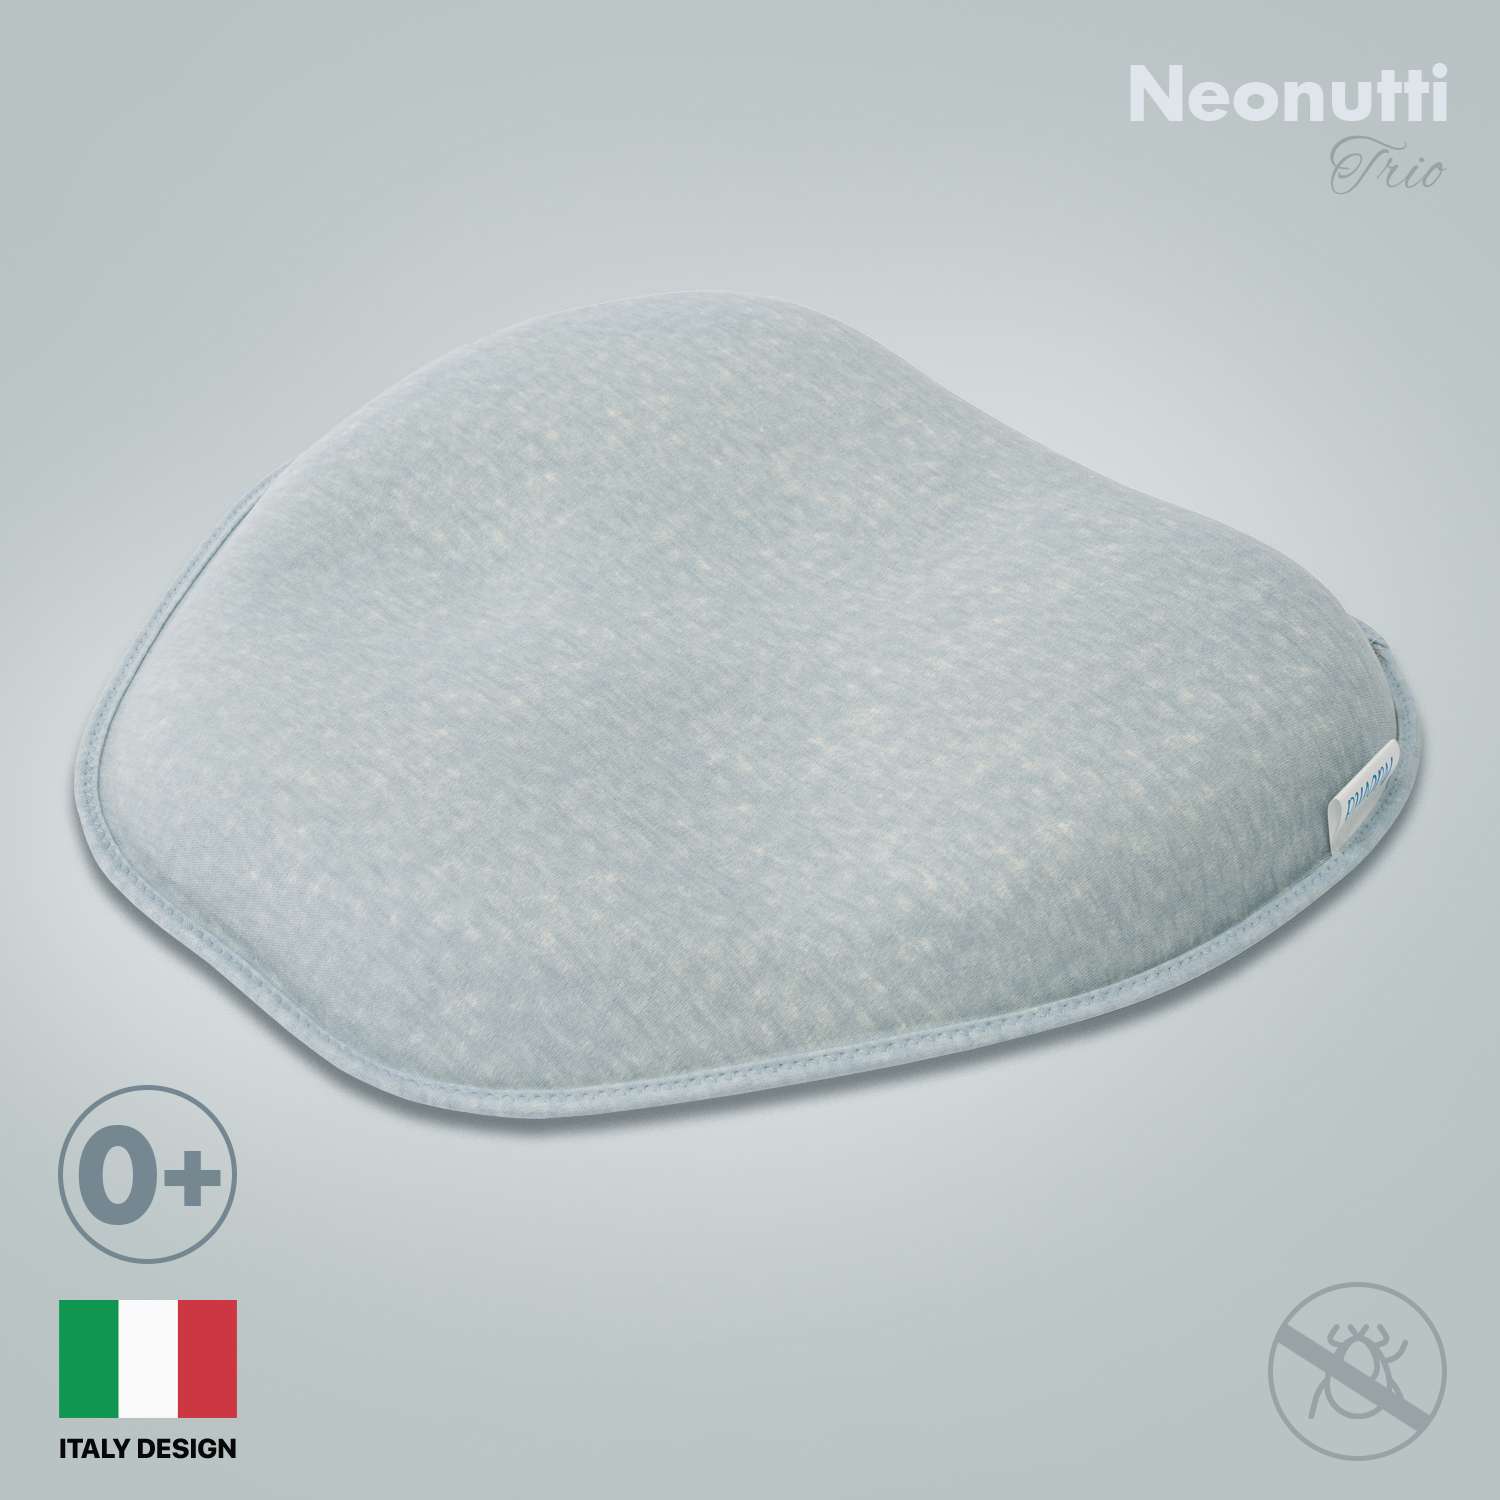 Подушка для новорожденного Nuovita Neonutti Trio Dipinto Синяя - фото 2